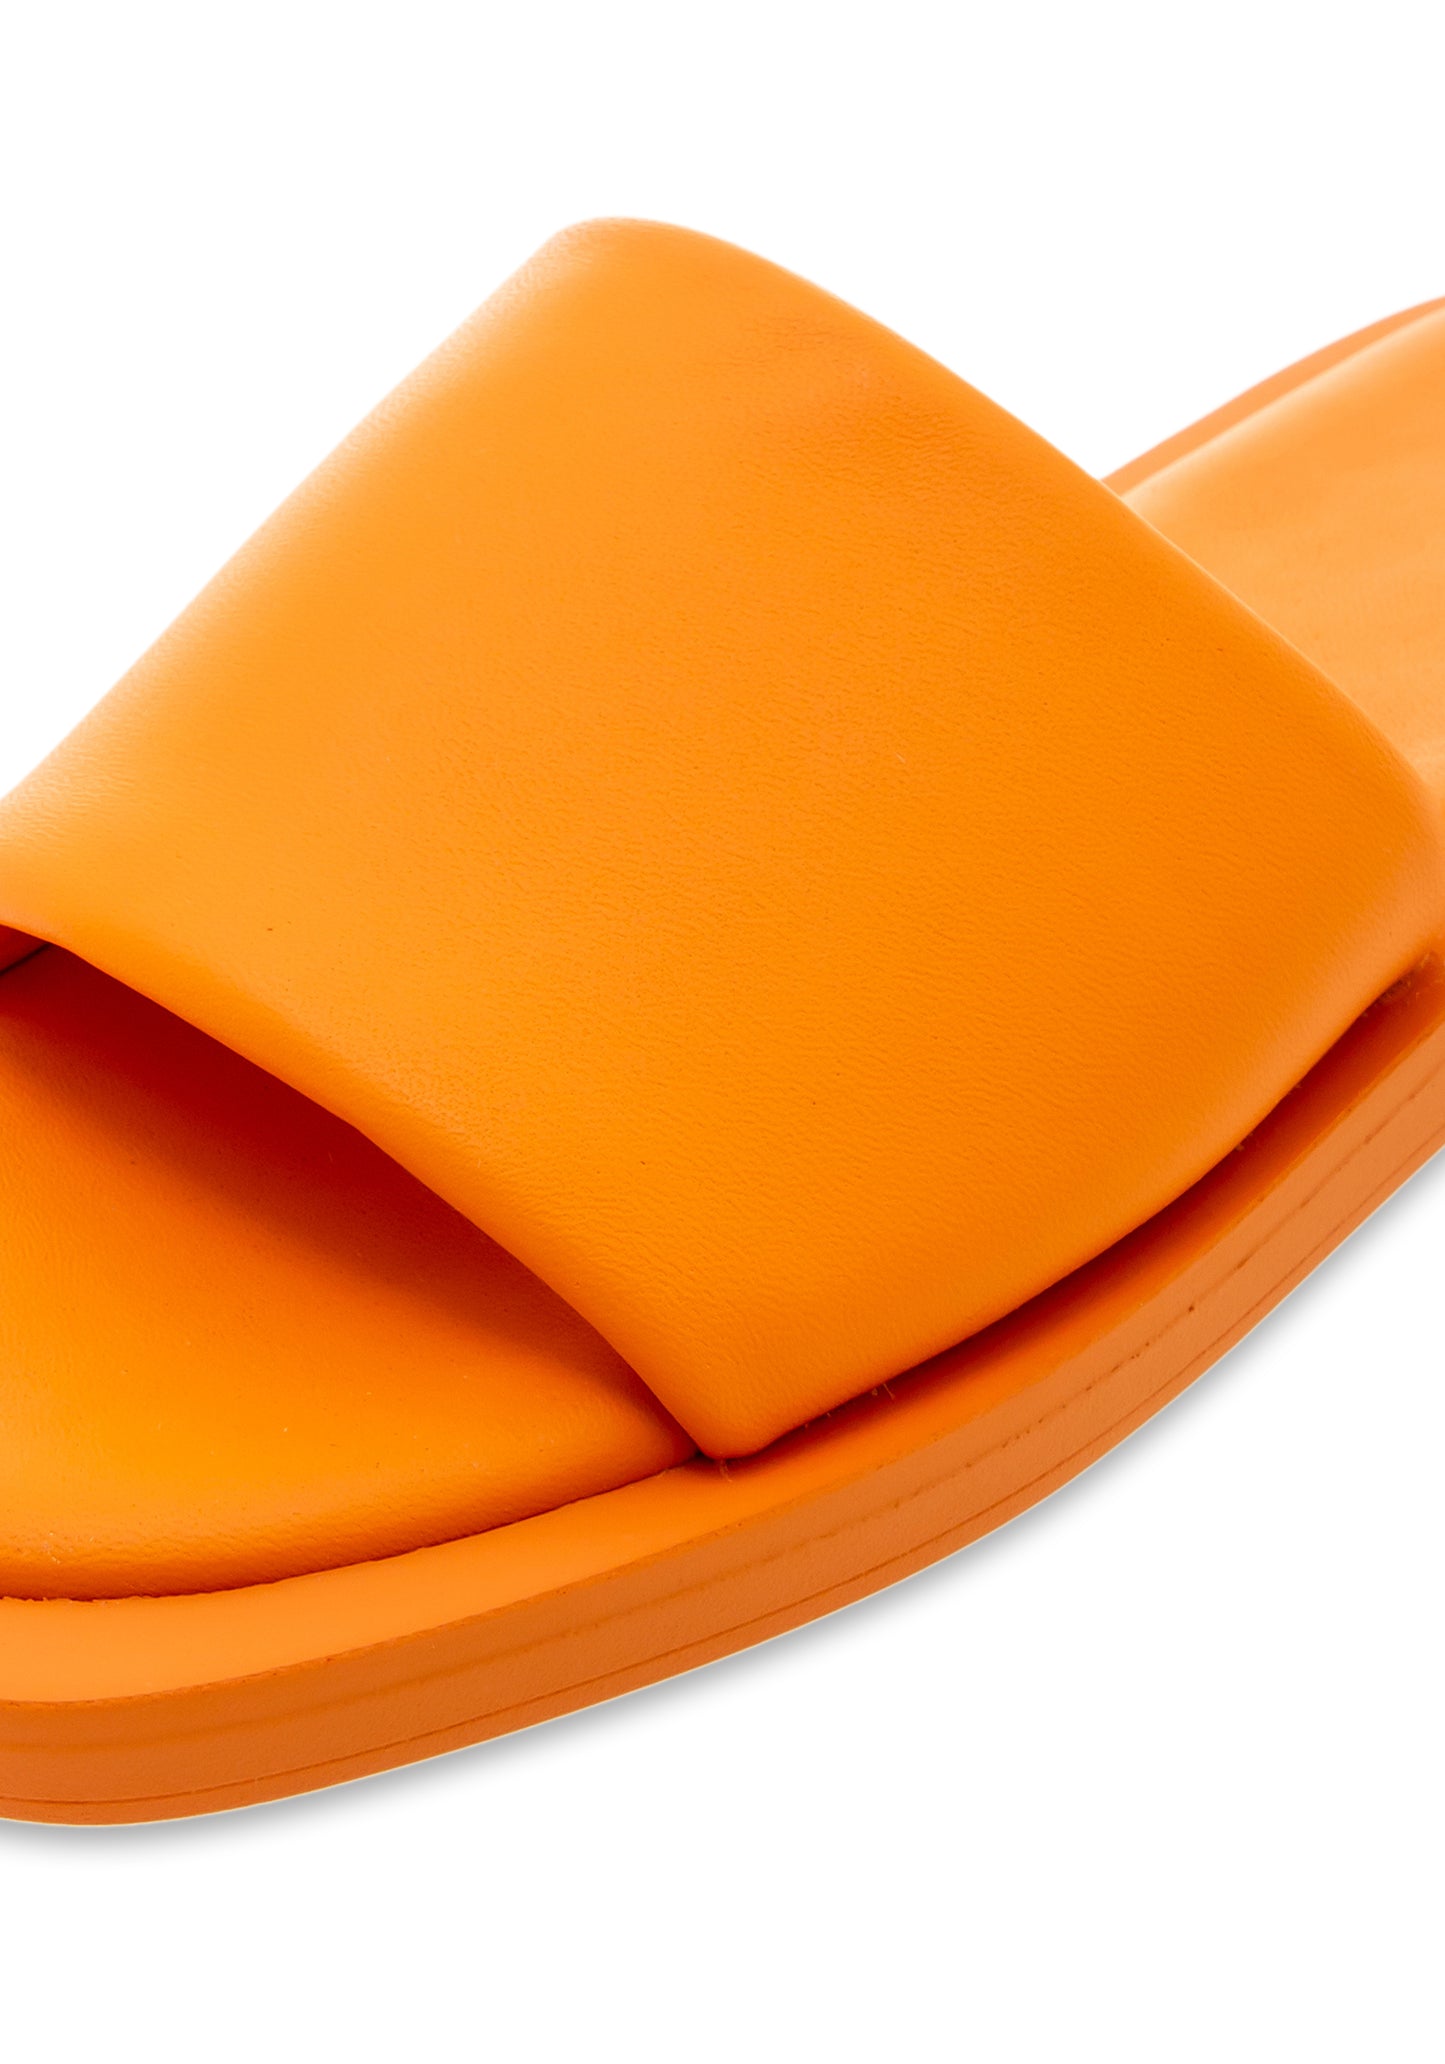 CPH789 Nappa amber orange | Bildmaterial bereitgestellt von SHOES.PLEASE.